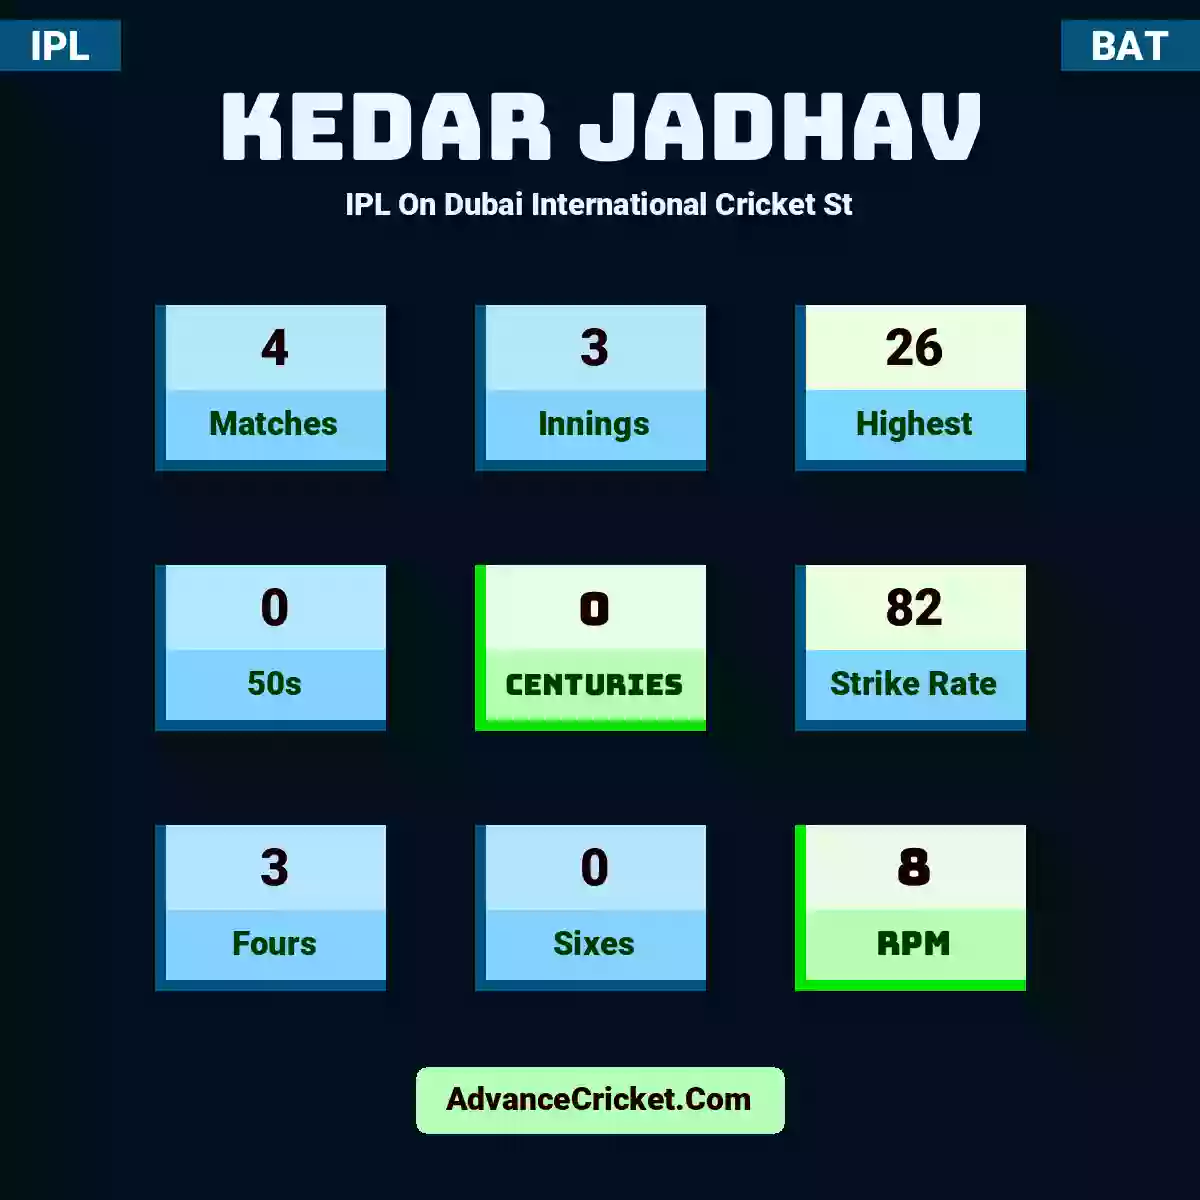 Kedar Jadhav IPL  On Dubai International Cricket St, Kedar Jadhav played 4 matches, scored 26 runs as highest, 0 half-centuries, and 0 centuries, with a strike rate of 82. K.Jadhav hit 3 fours and 0 sixes, with an RPM of 8.